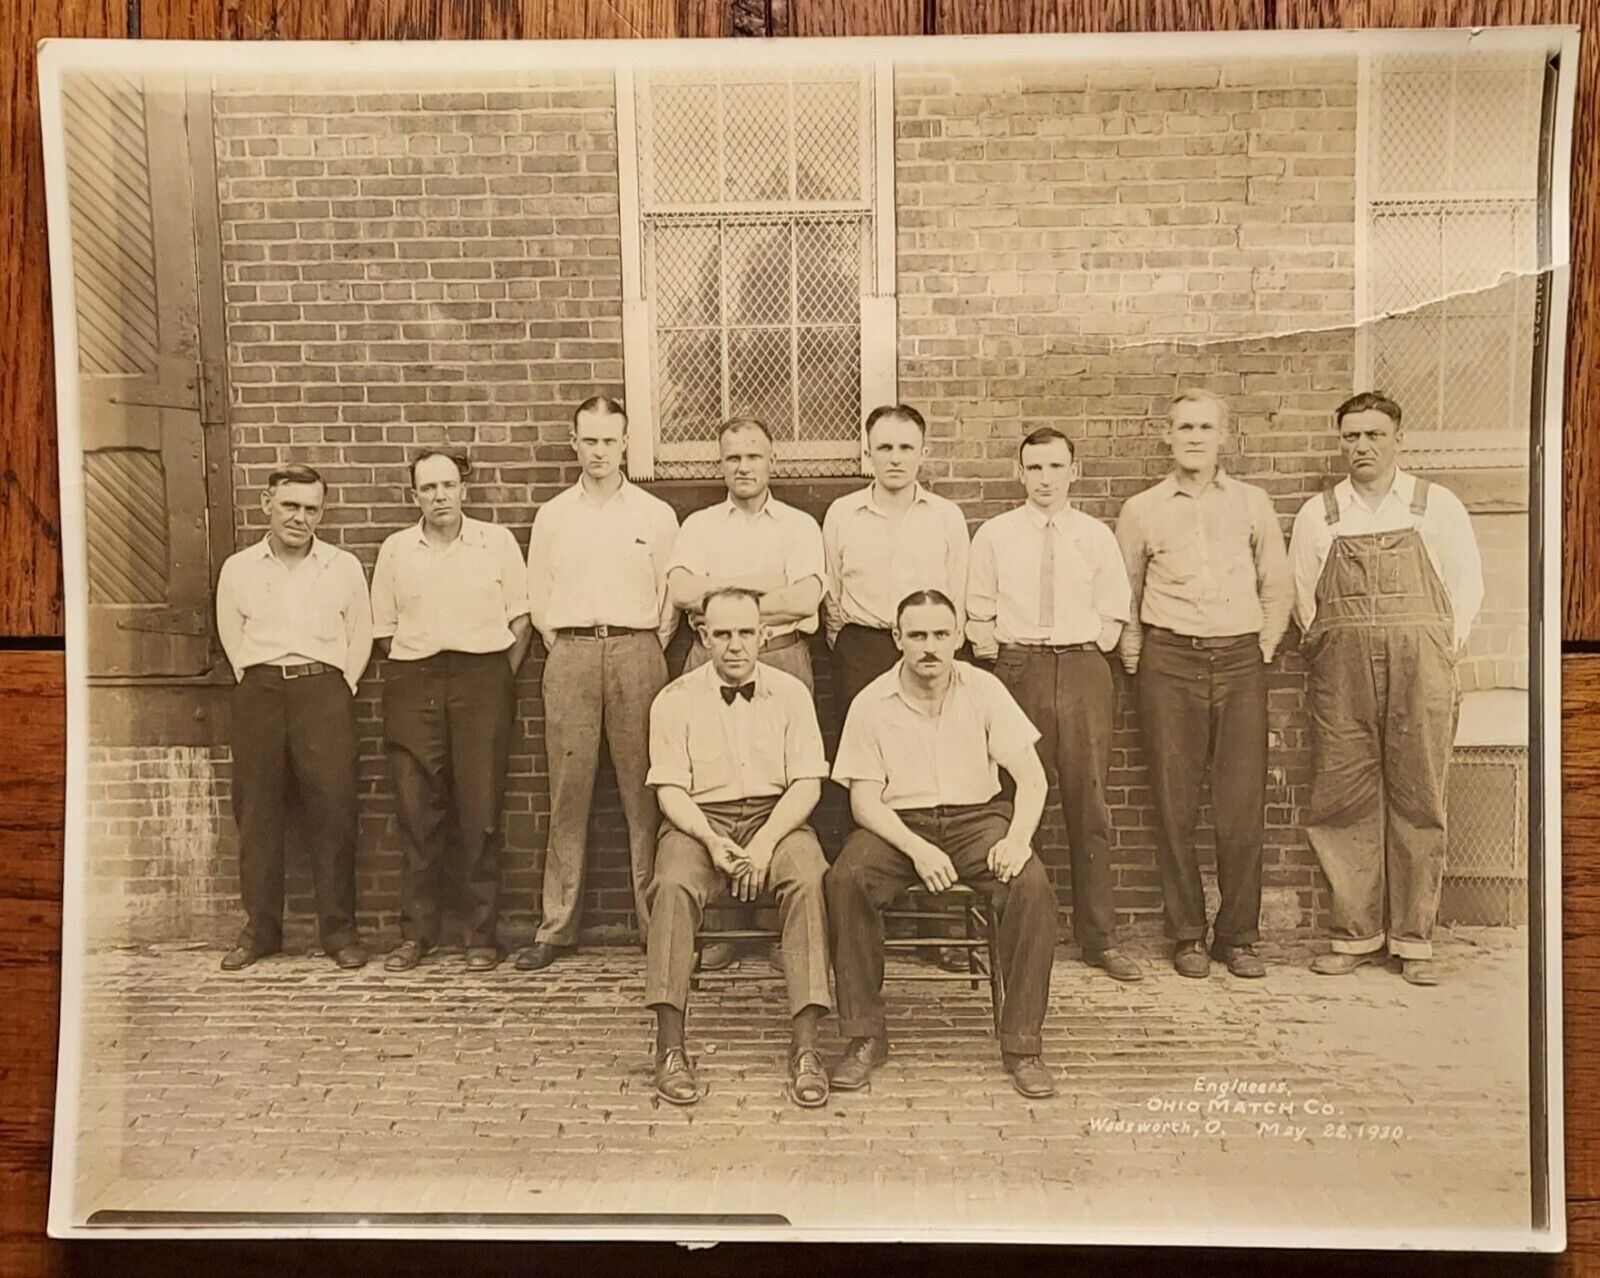 Ohio Match Co Wadsworth Ohio Engineers May 22, 1930 Rare Photo 8x10